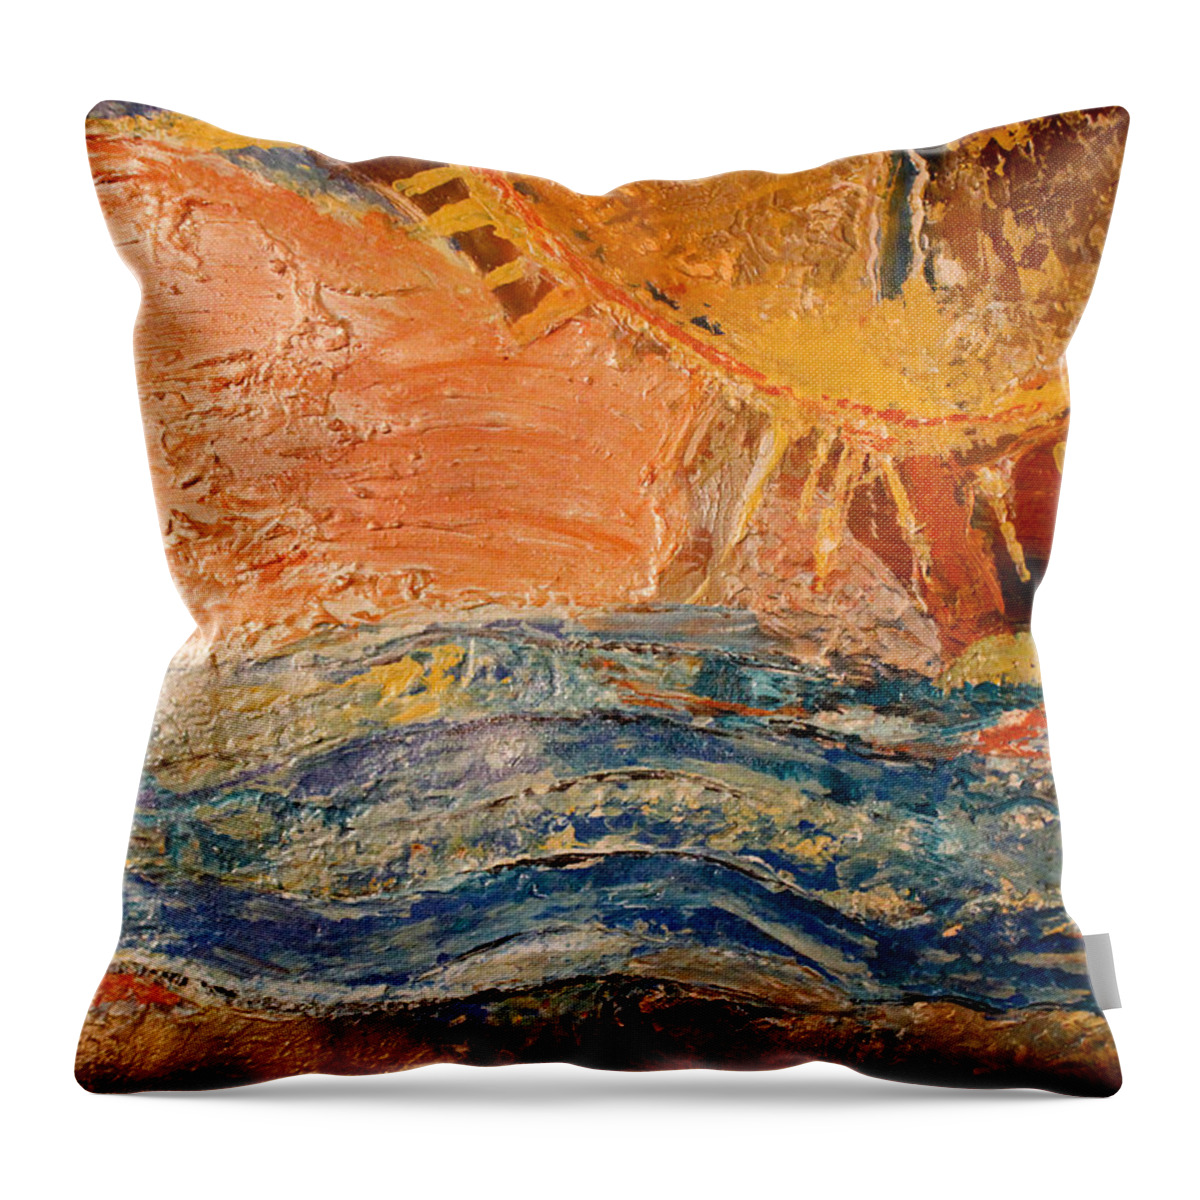 Original Art Throw Pillow featuring the mixed media Peaceful by Artista Elisabet